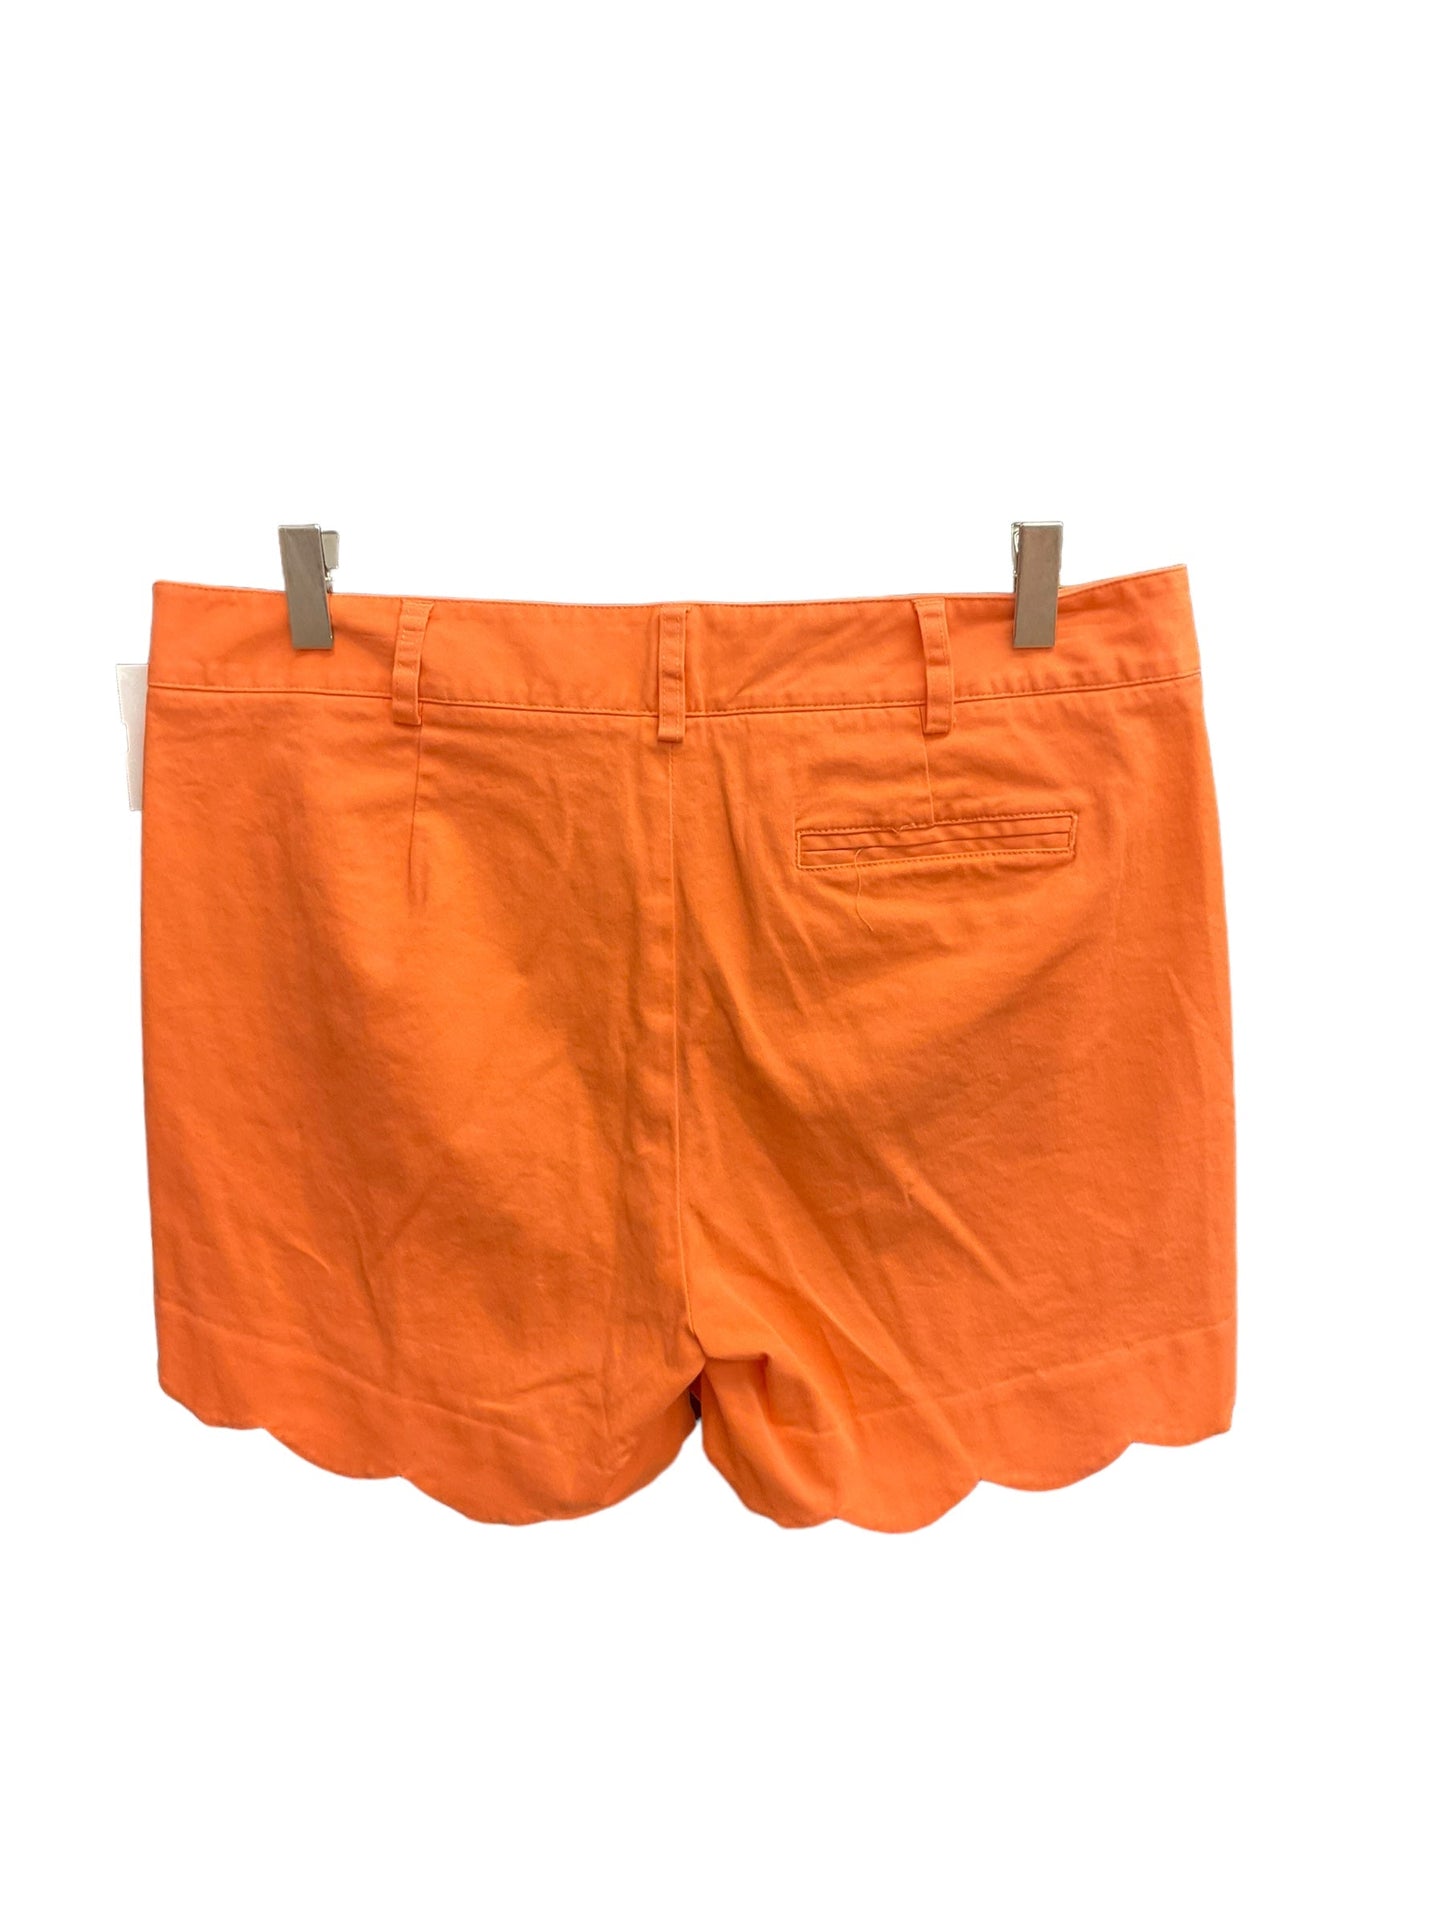 Orange Shorts J Mclaughlin, Size 10